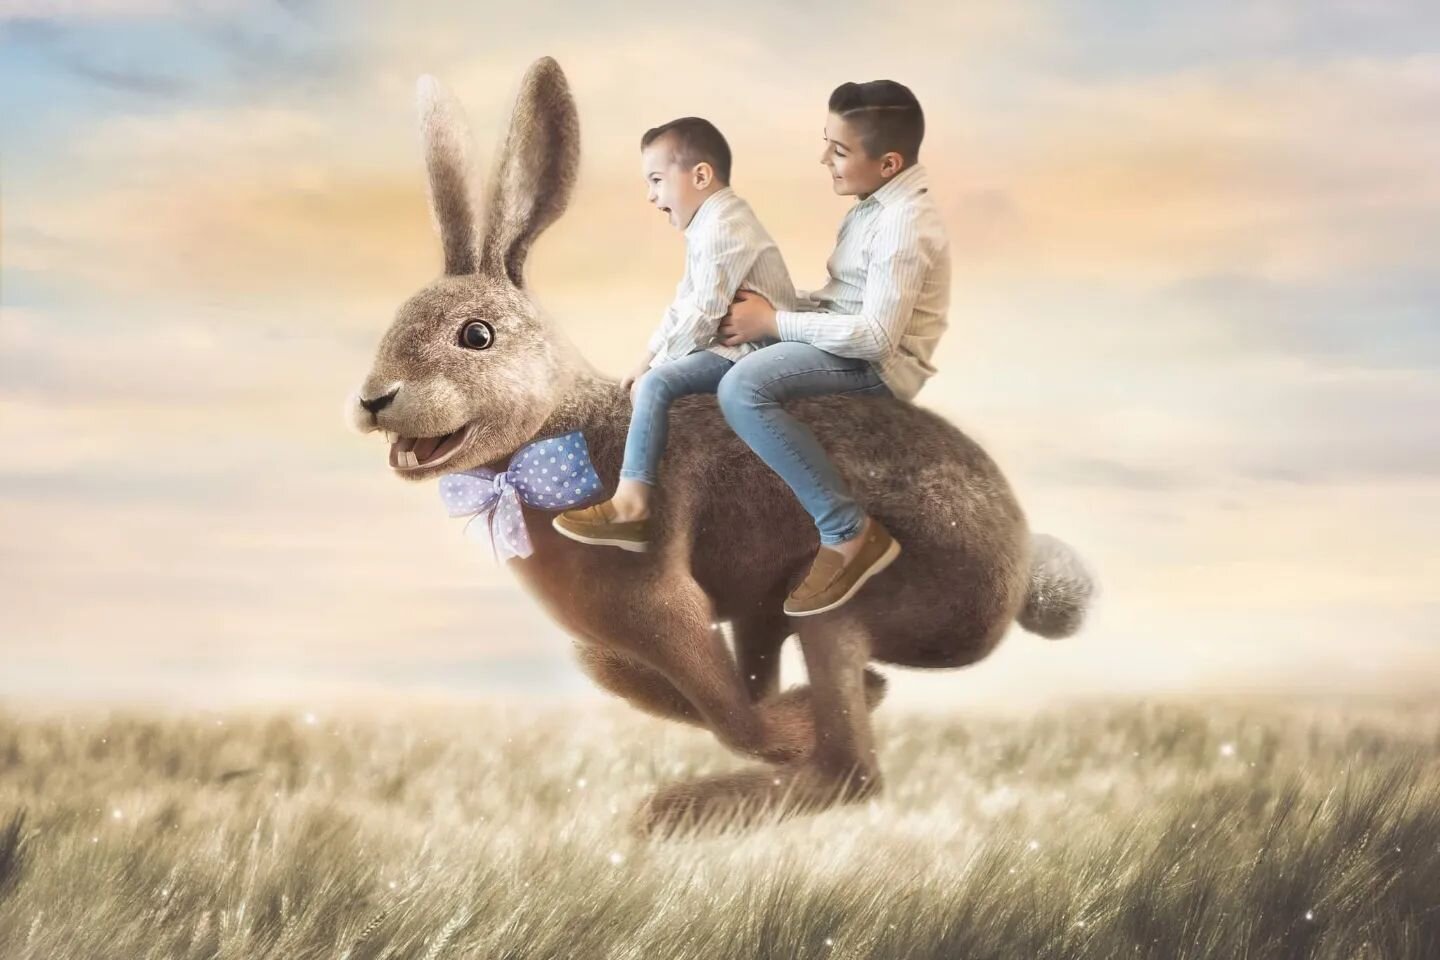 &quot;The Hunt is On!&quot; Happy Easter! 🐇
Enchanted Childhood Fine Art Collection @mumandmini @susiemakaryan 

#fineart #enchanted #happyeaster #magicofchildhood #childrenofinstagram #childrenseemagic #bunny #egghunt